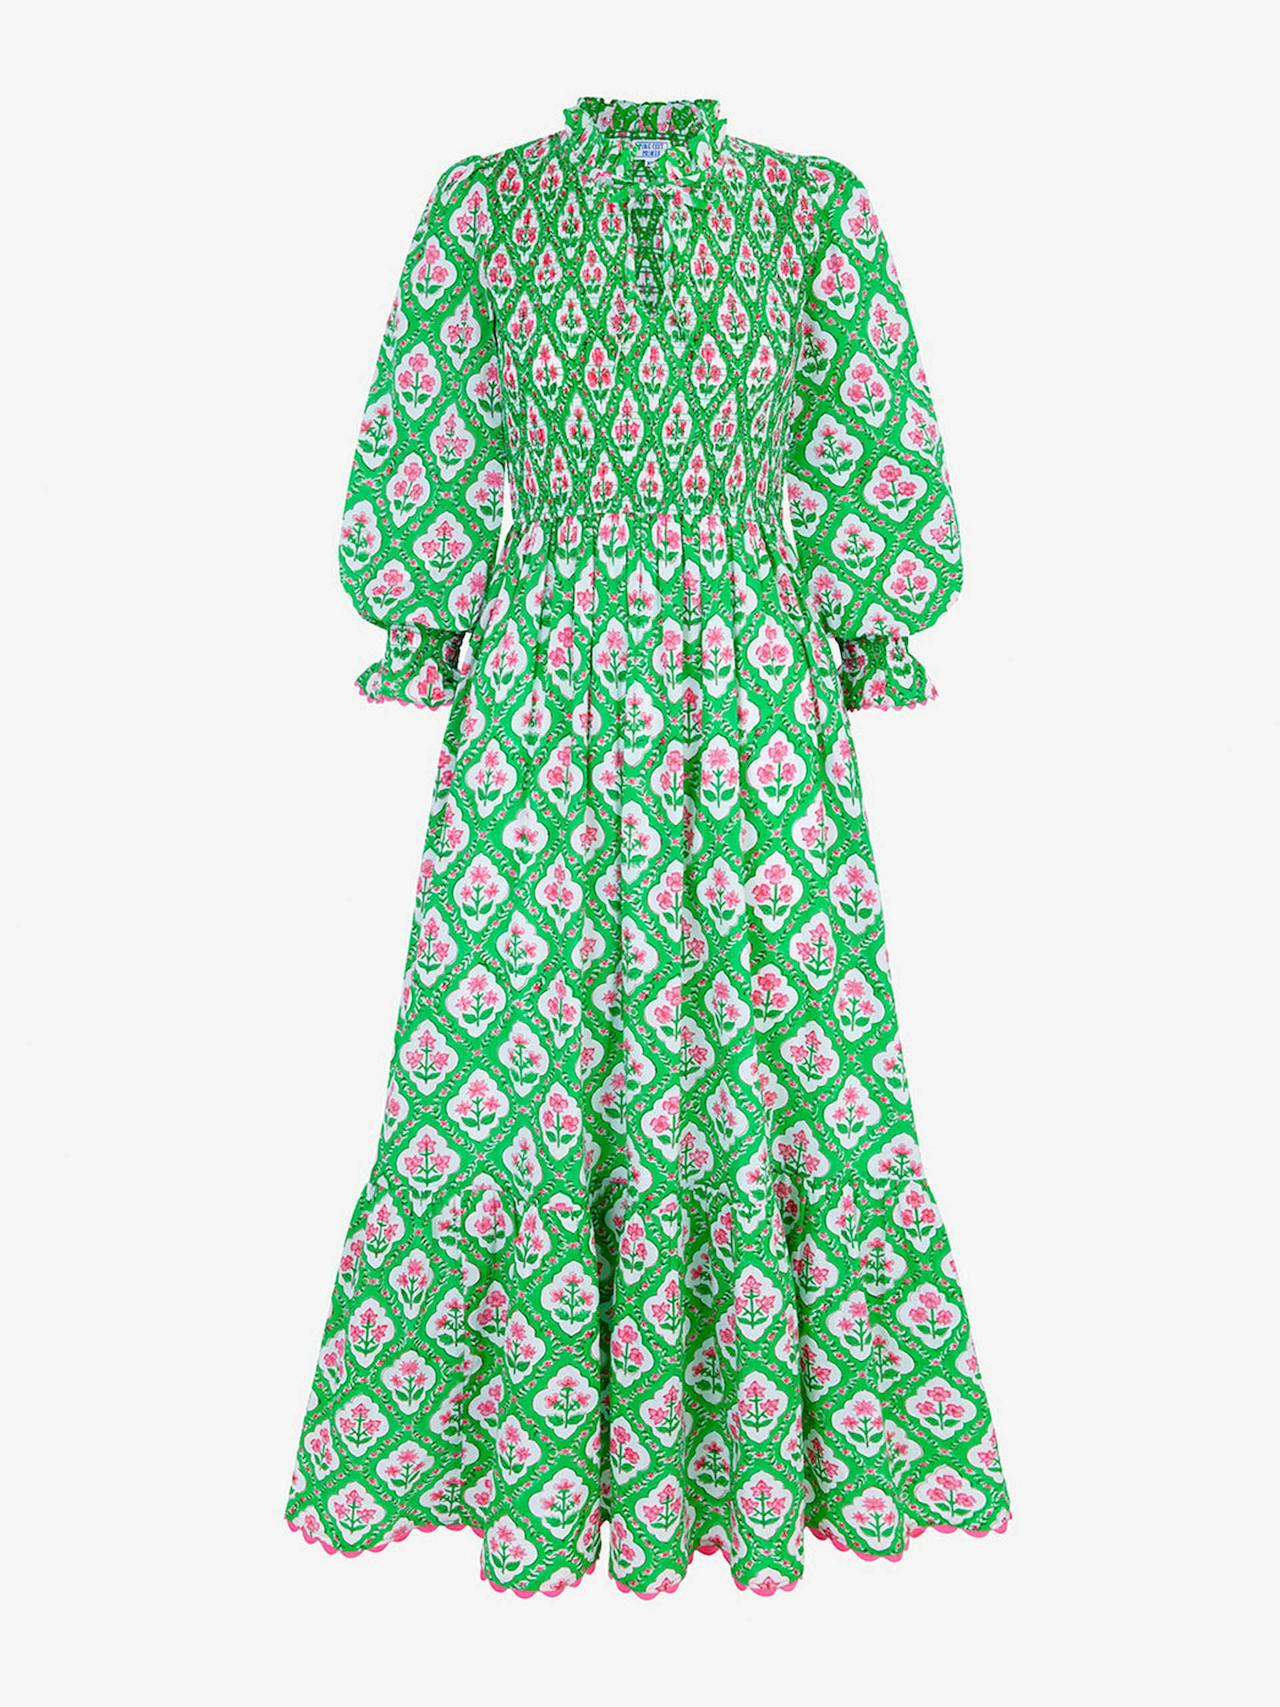 Emerald trellis izzy dress